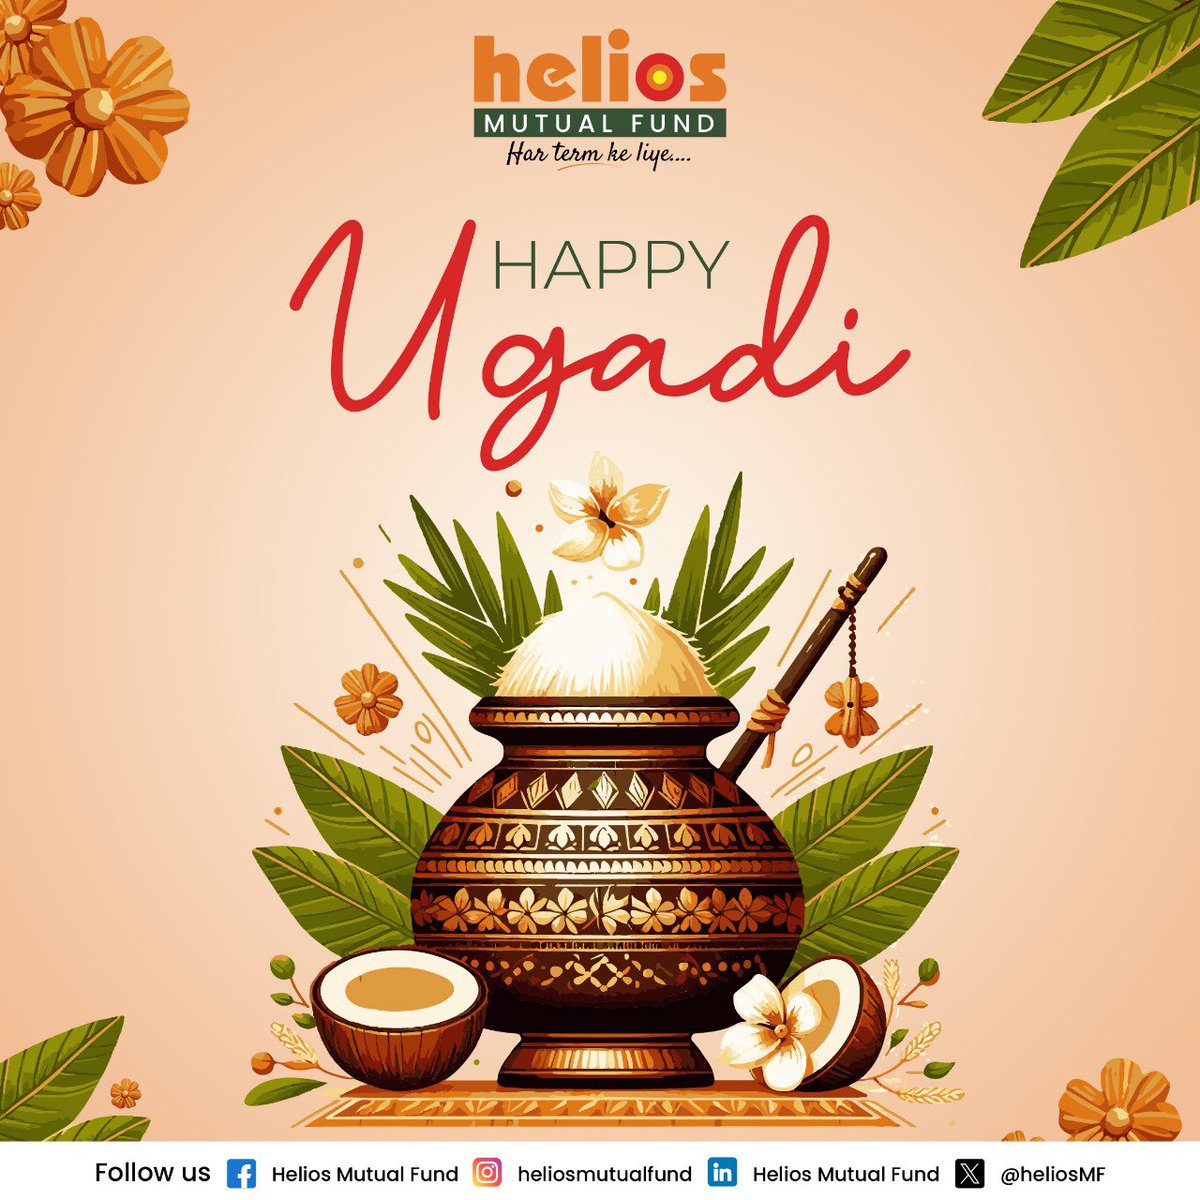 Happy Ugadi!